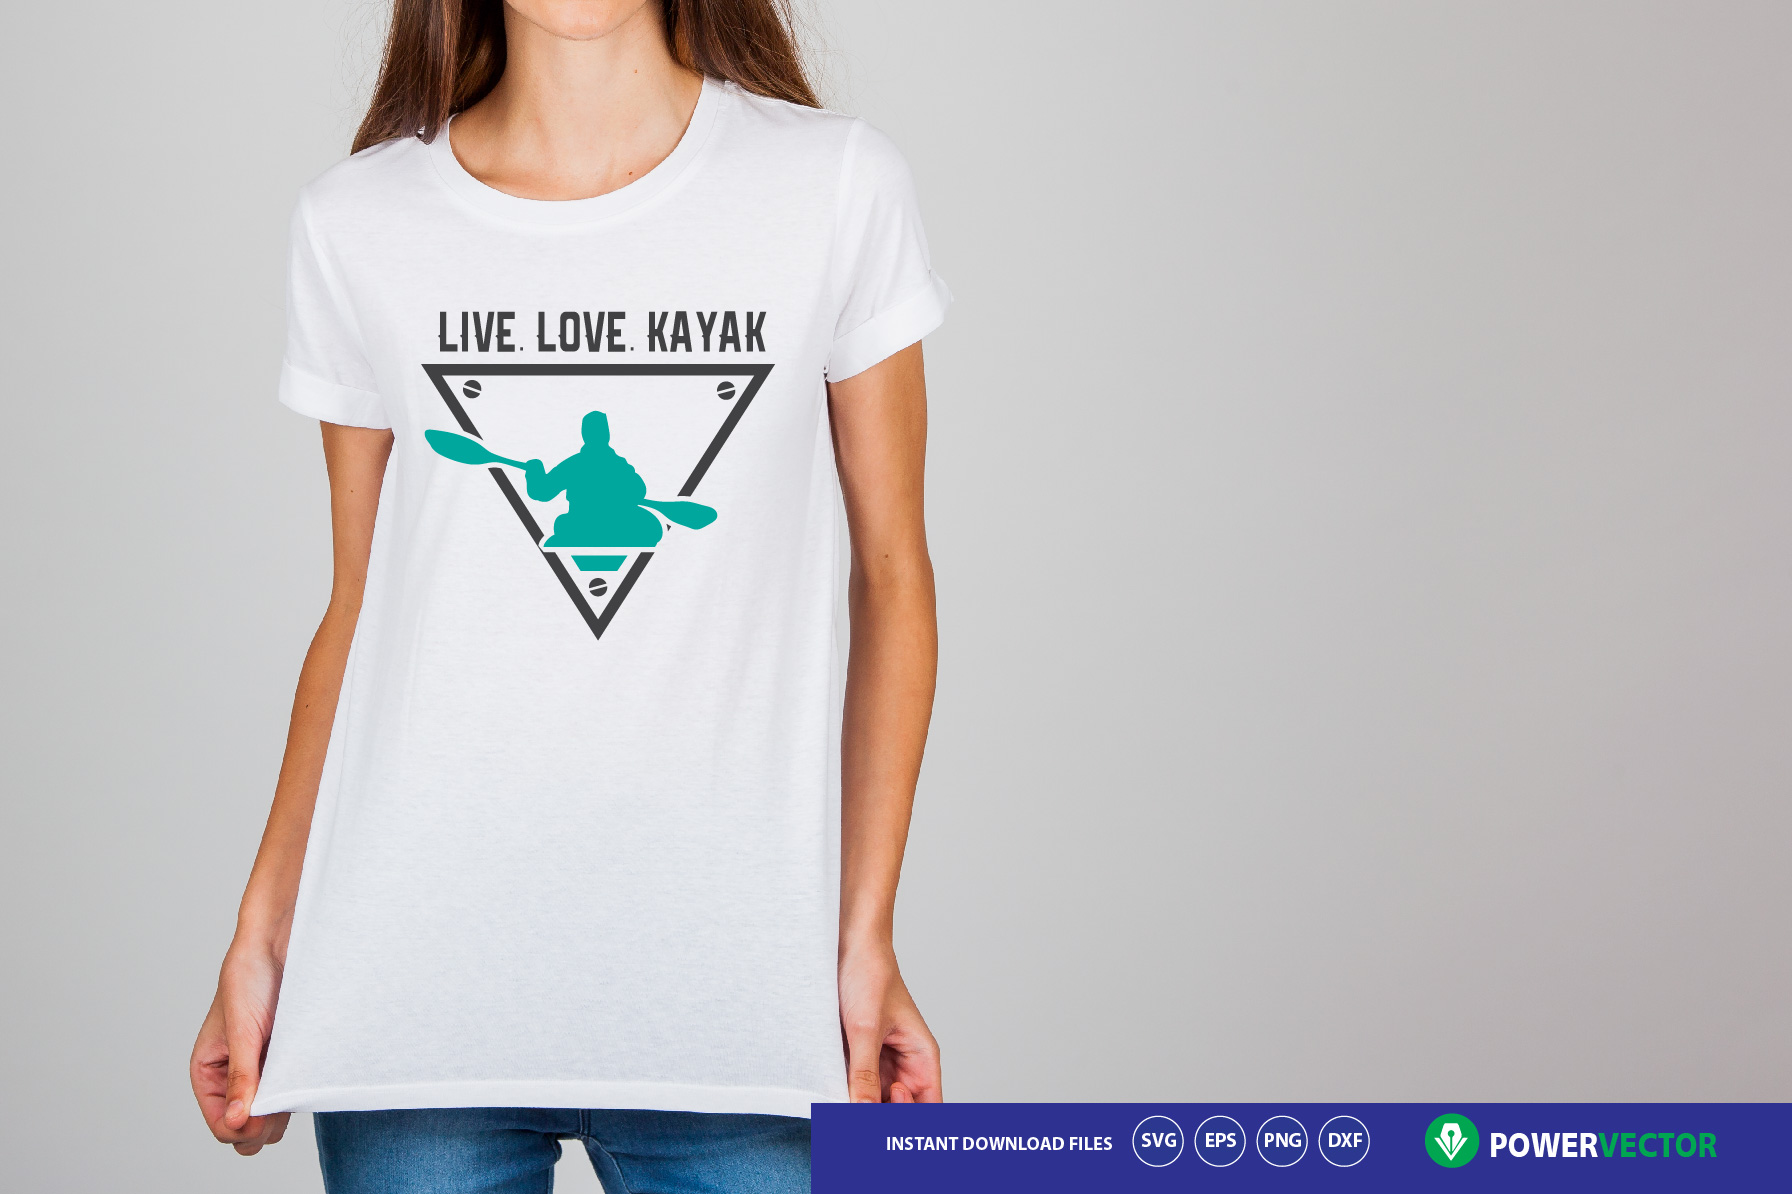 Download Live Love Kayak Svg, Dxf, Eps Cutting Files